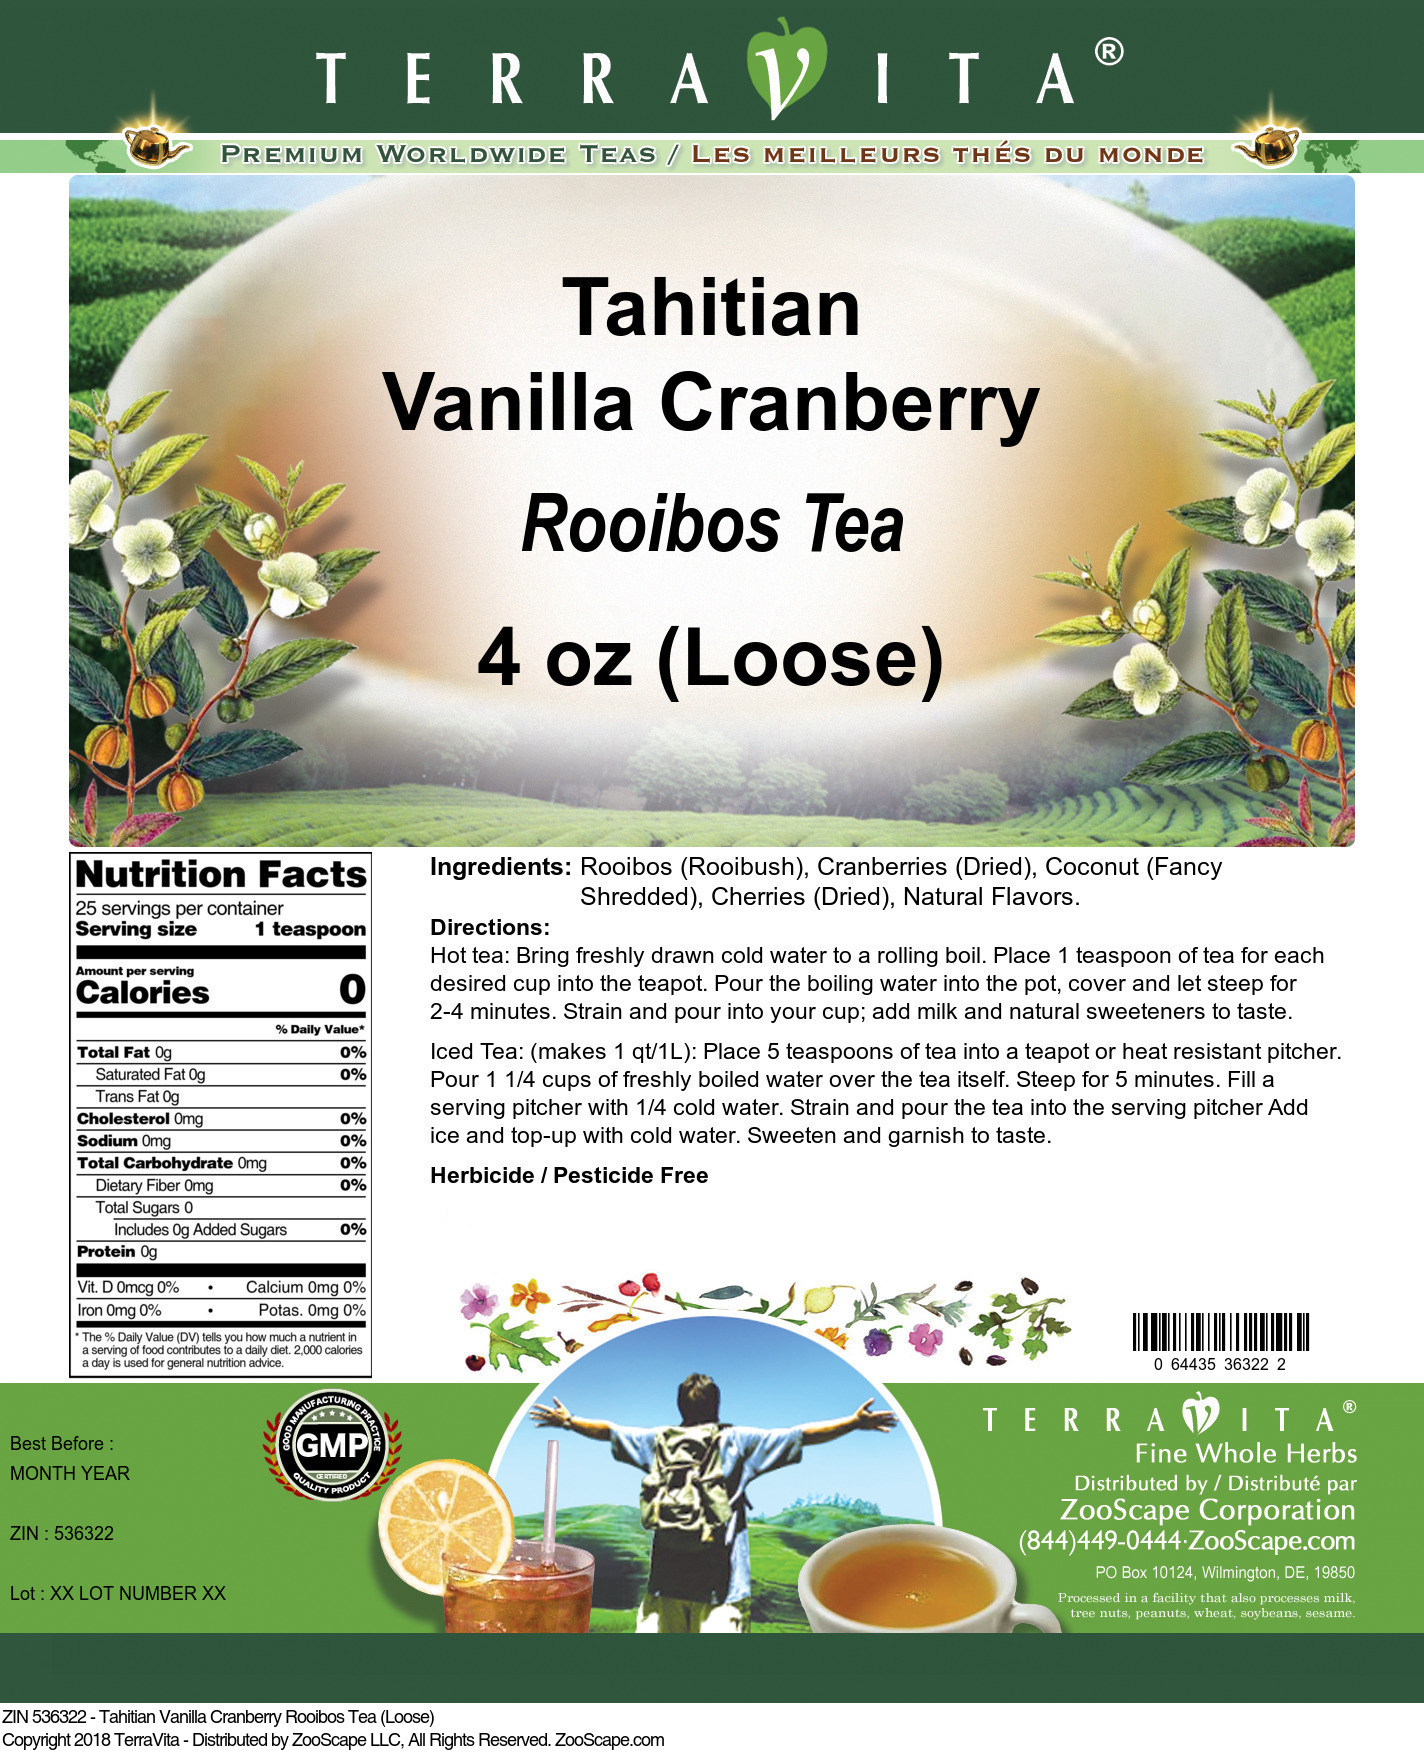 Tahitian Vanilla Cranberry Rooibos Tea (Loose) - Label